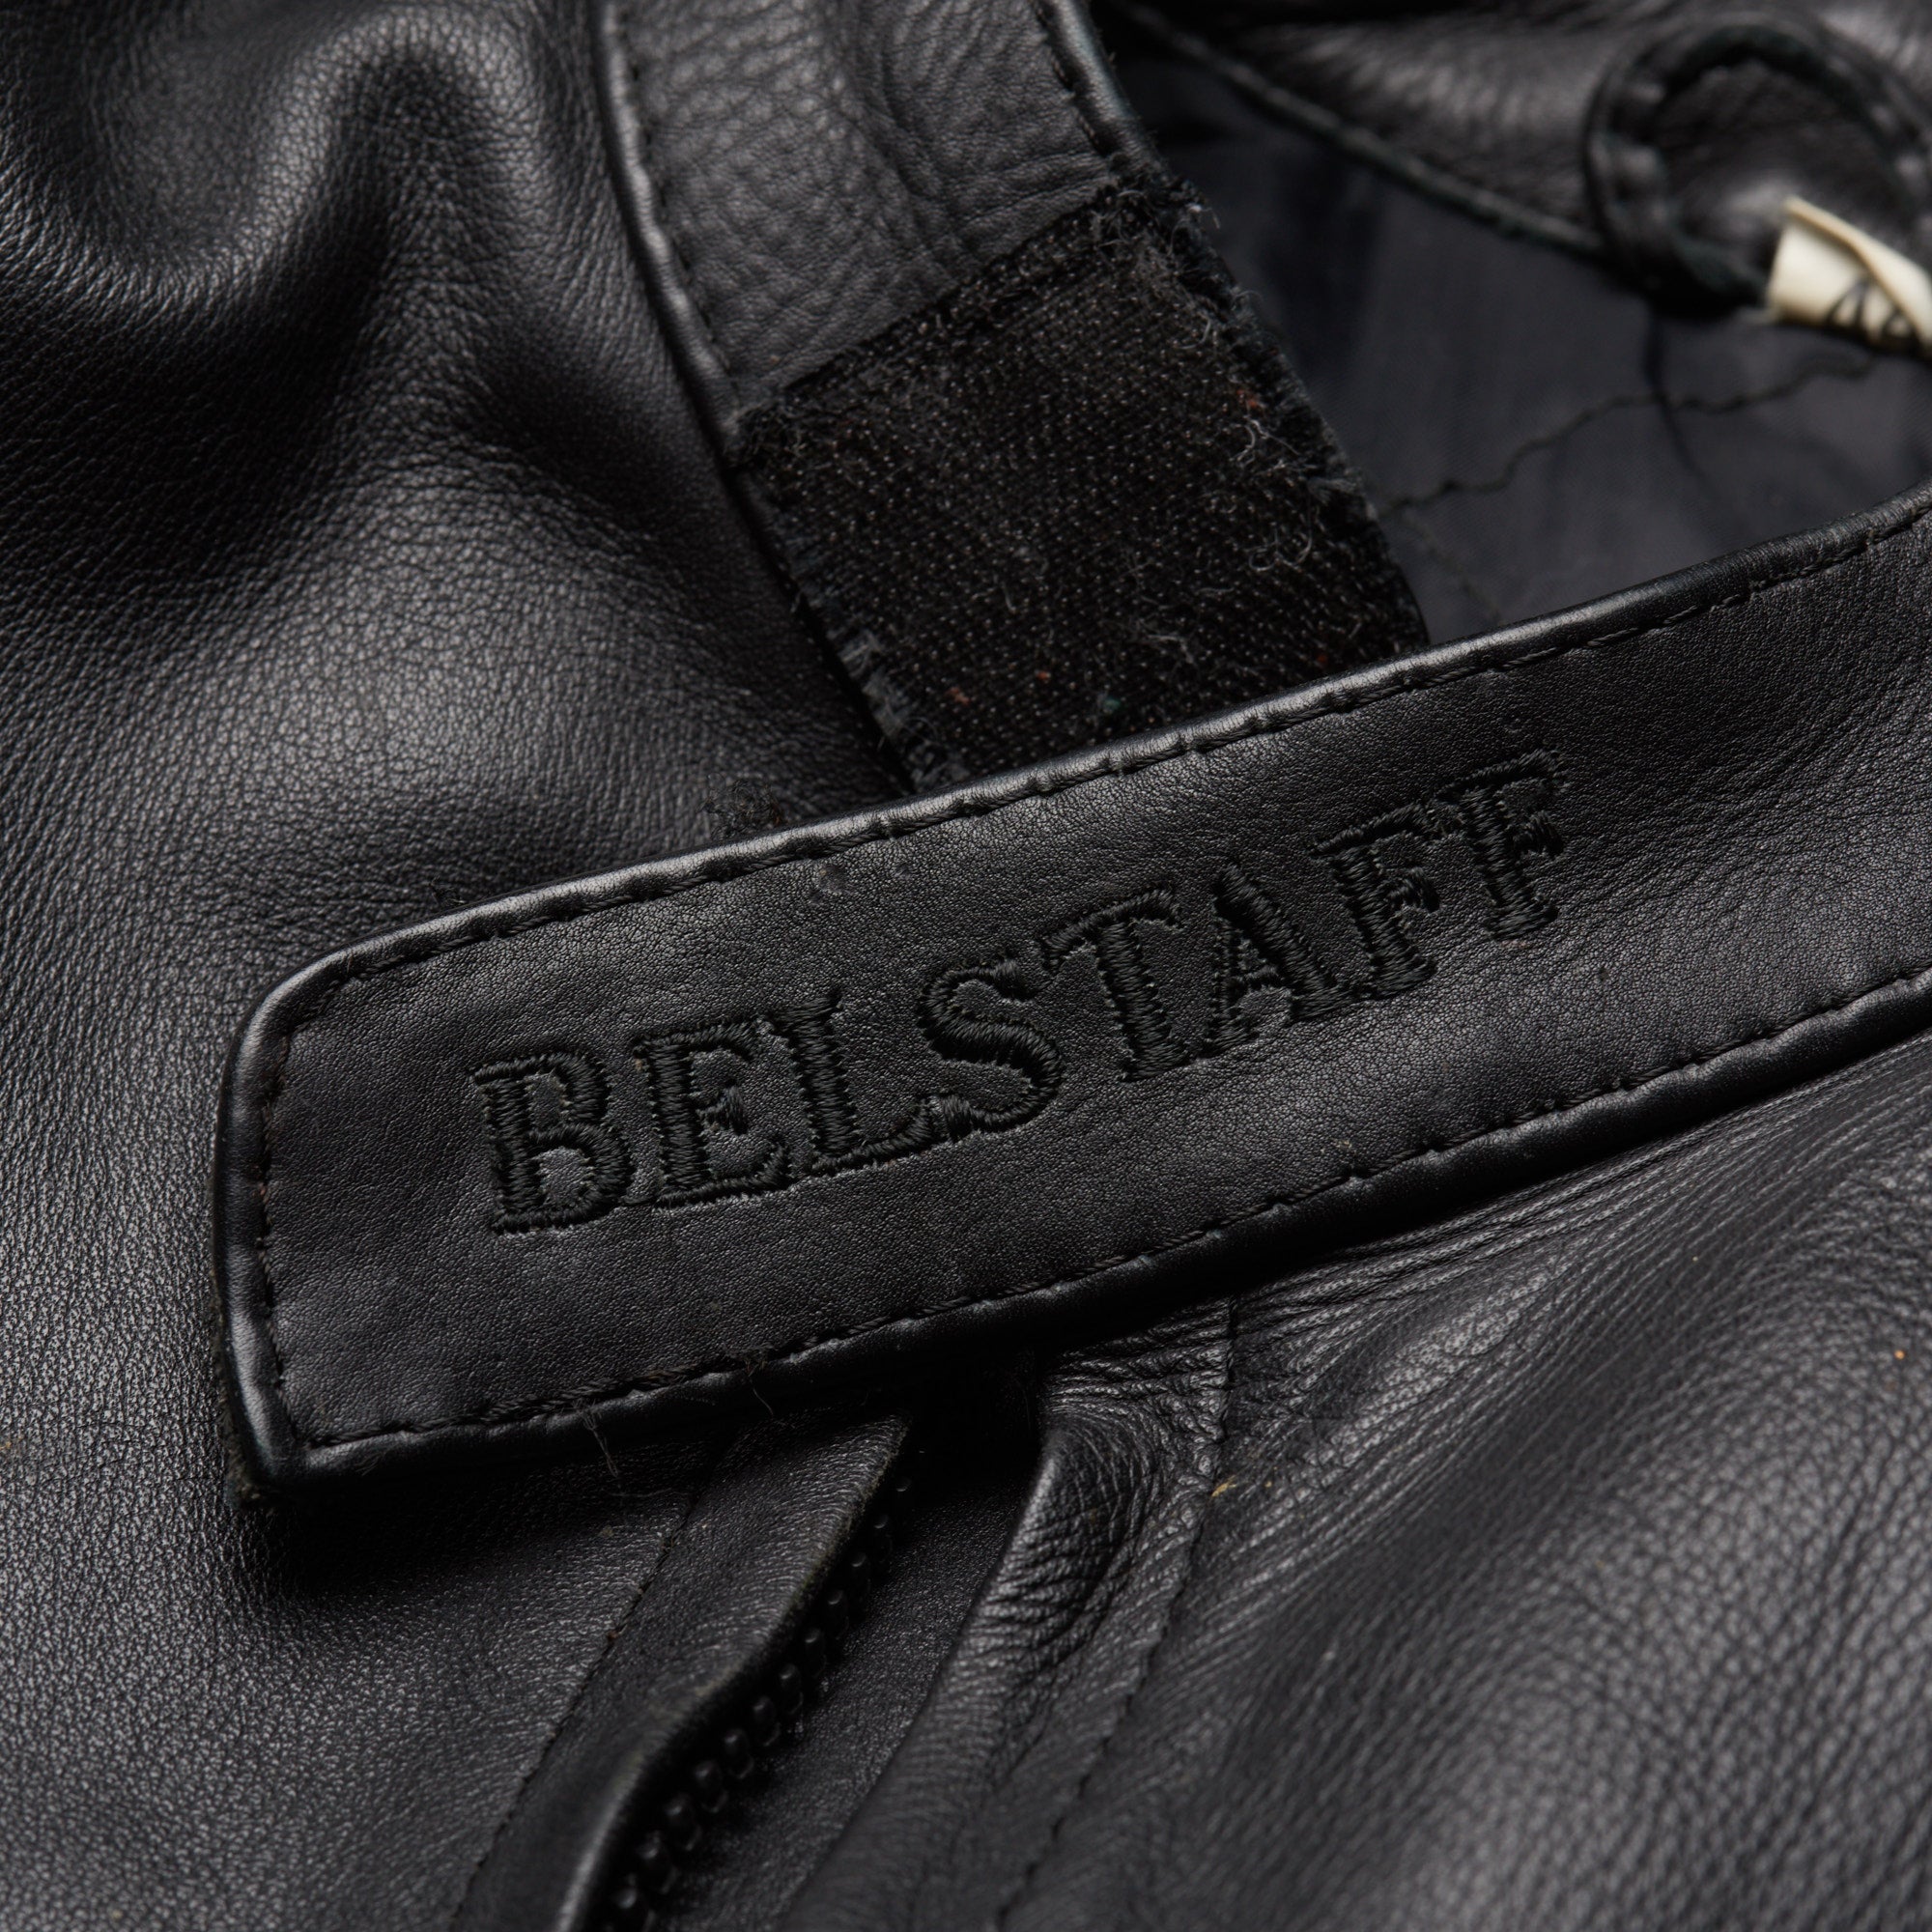 BELSTAFF Black Leather Motorcycle Jacket Protectors Size 44 US S Made in UK BELSTAFF